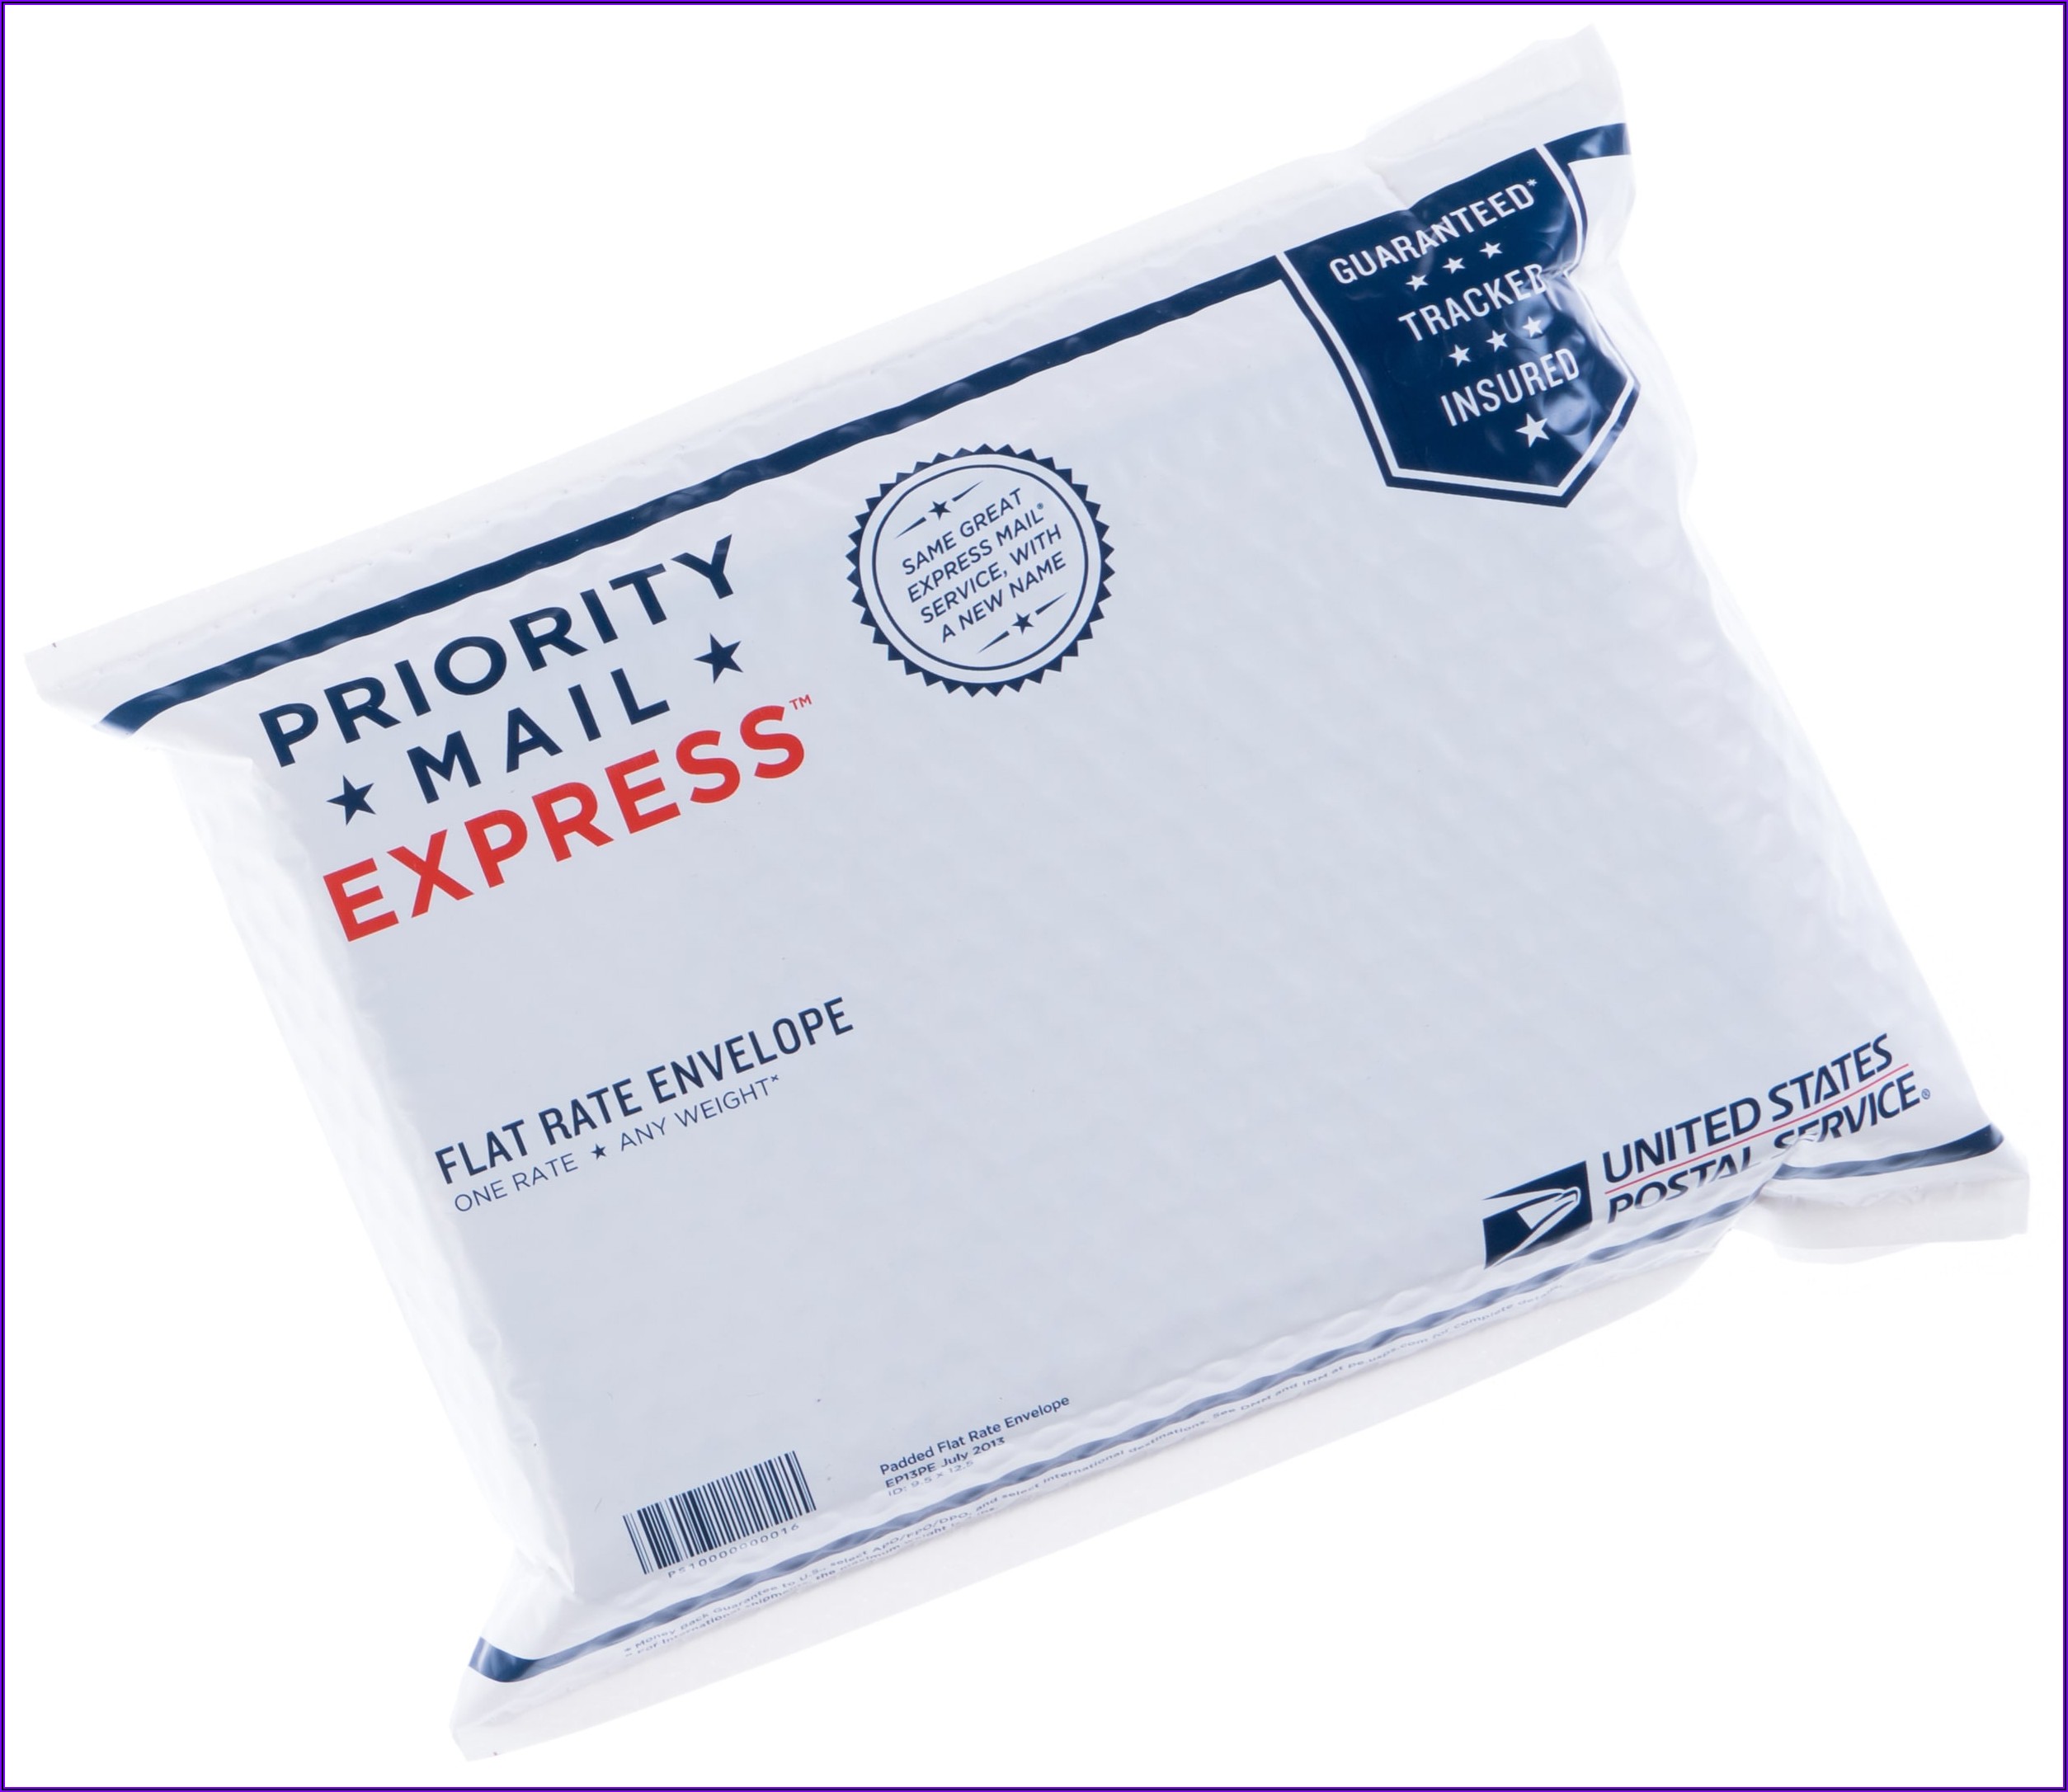 Usps Postal Rates For Padded Envelopes